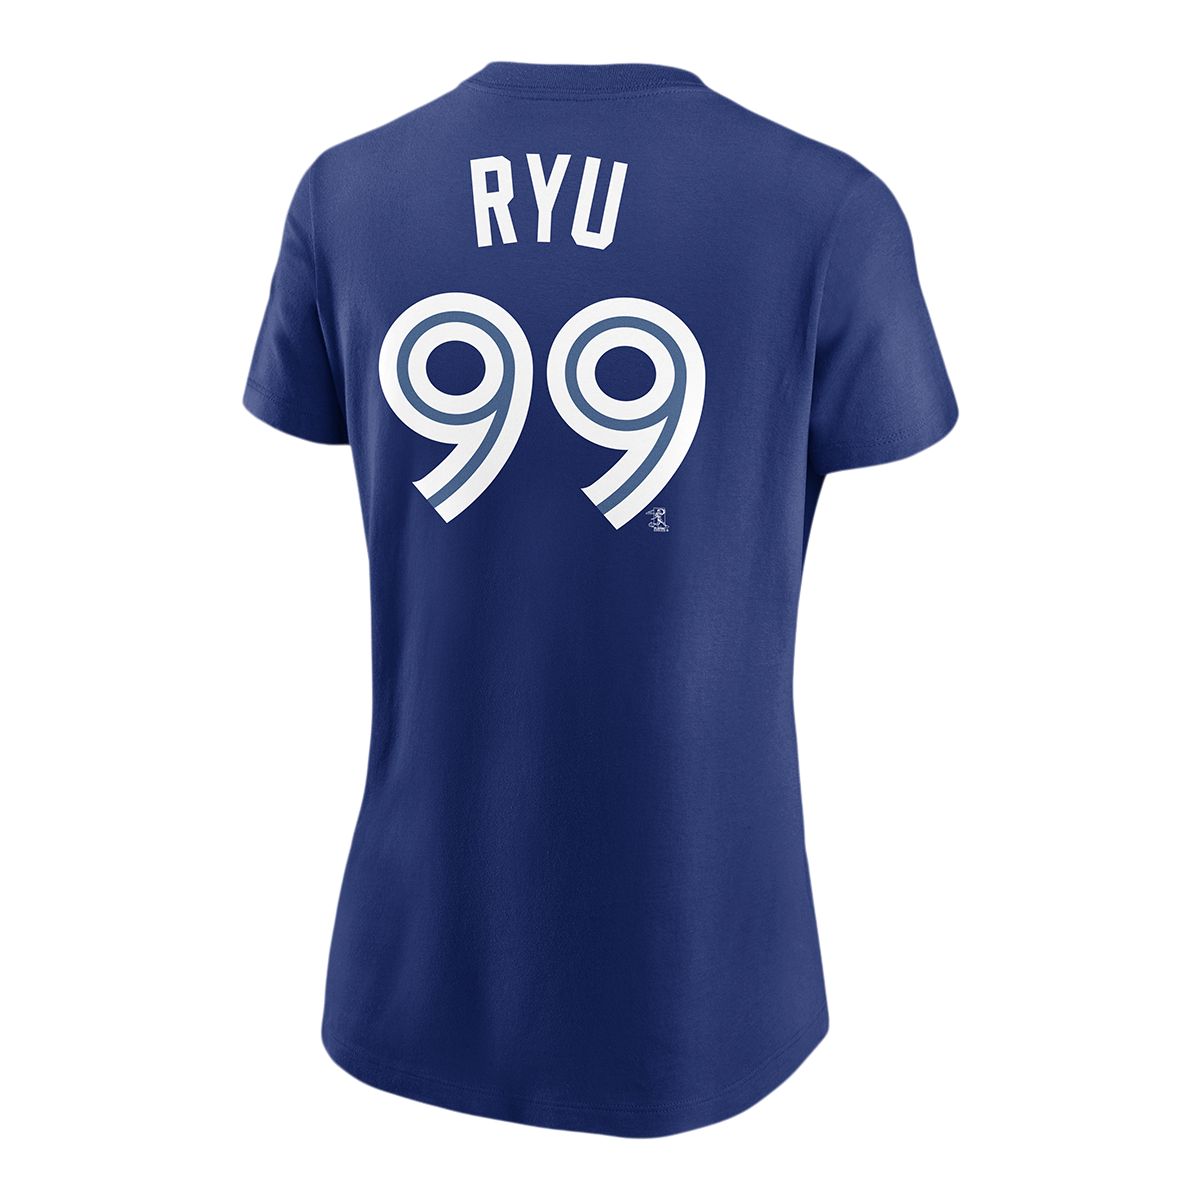 Toronto Blue Jays Nike Women's Hyun-jin Ryu T Shirt